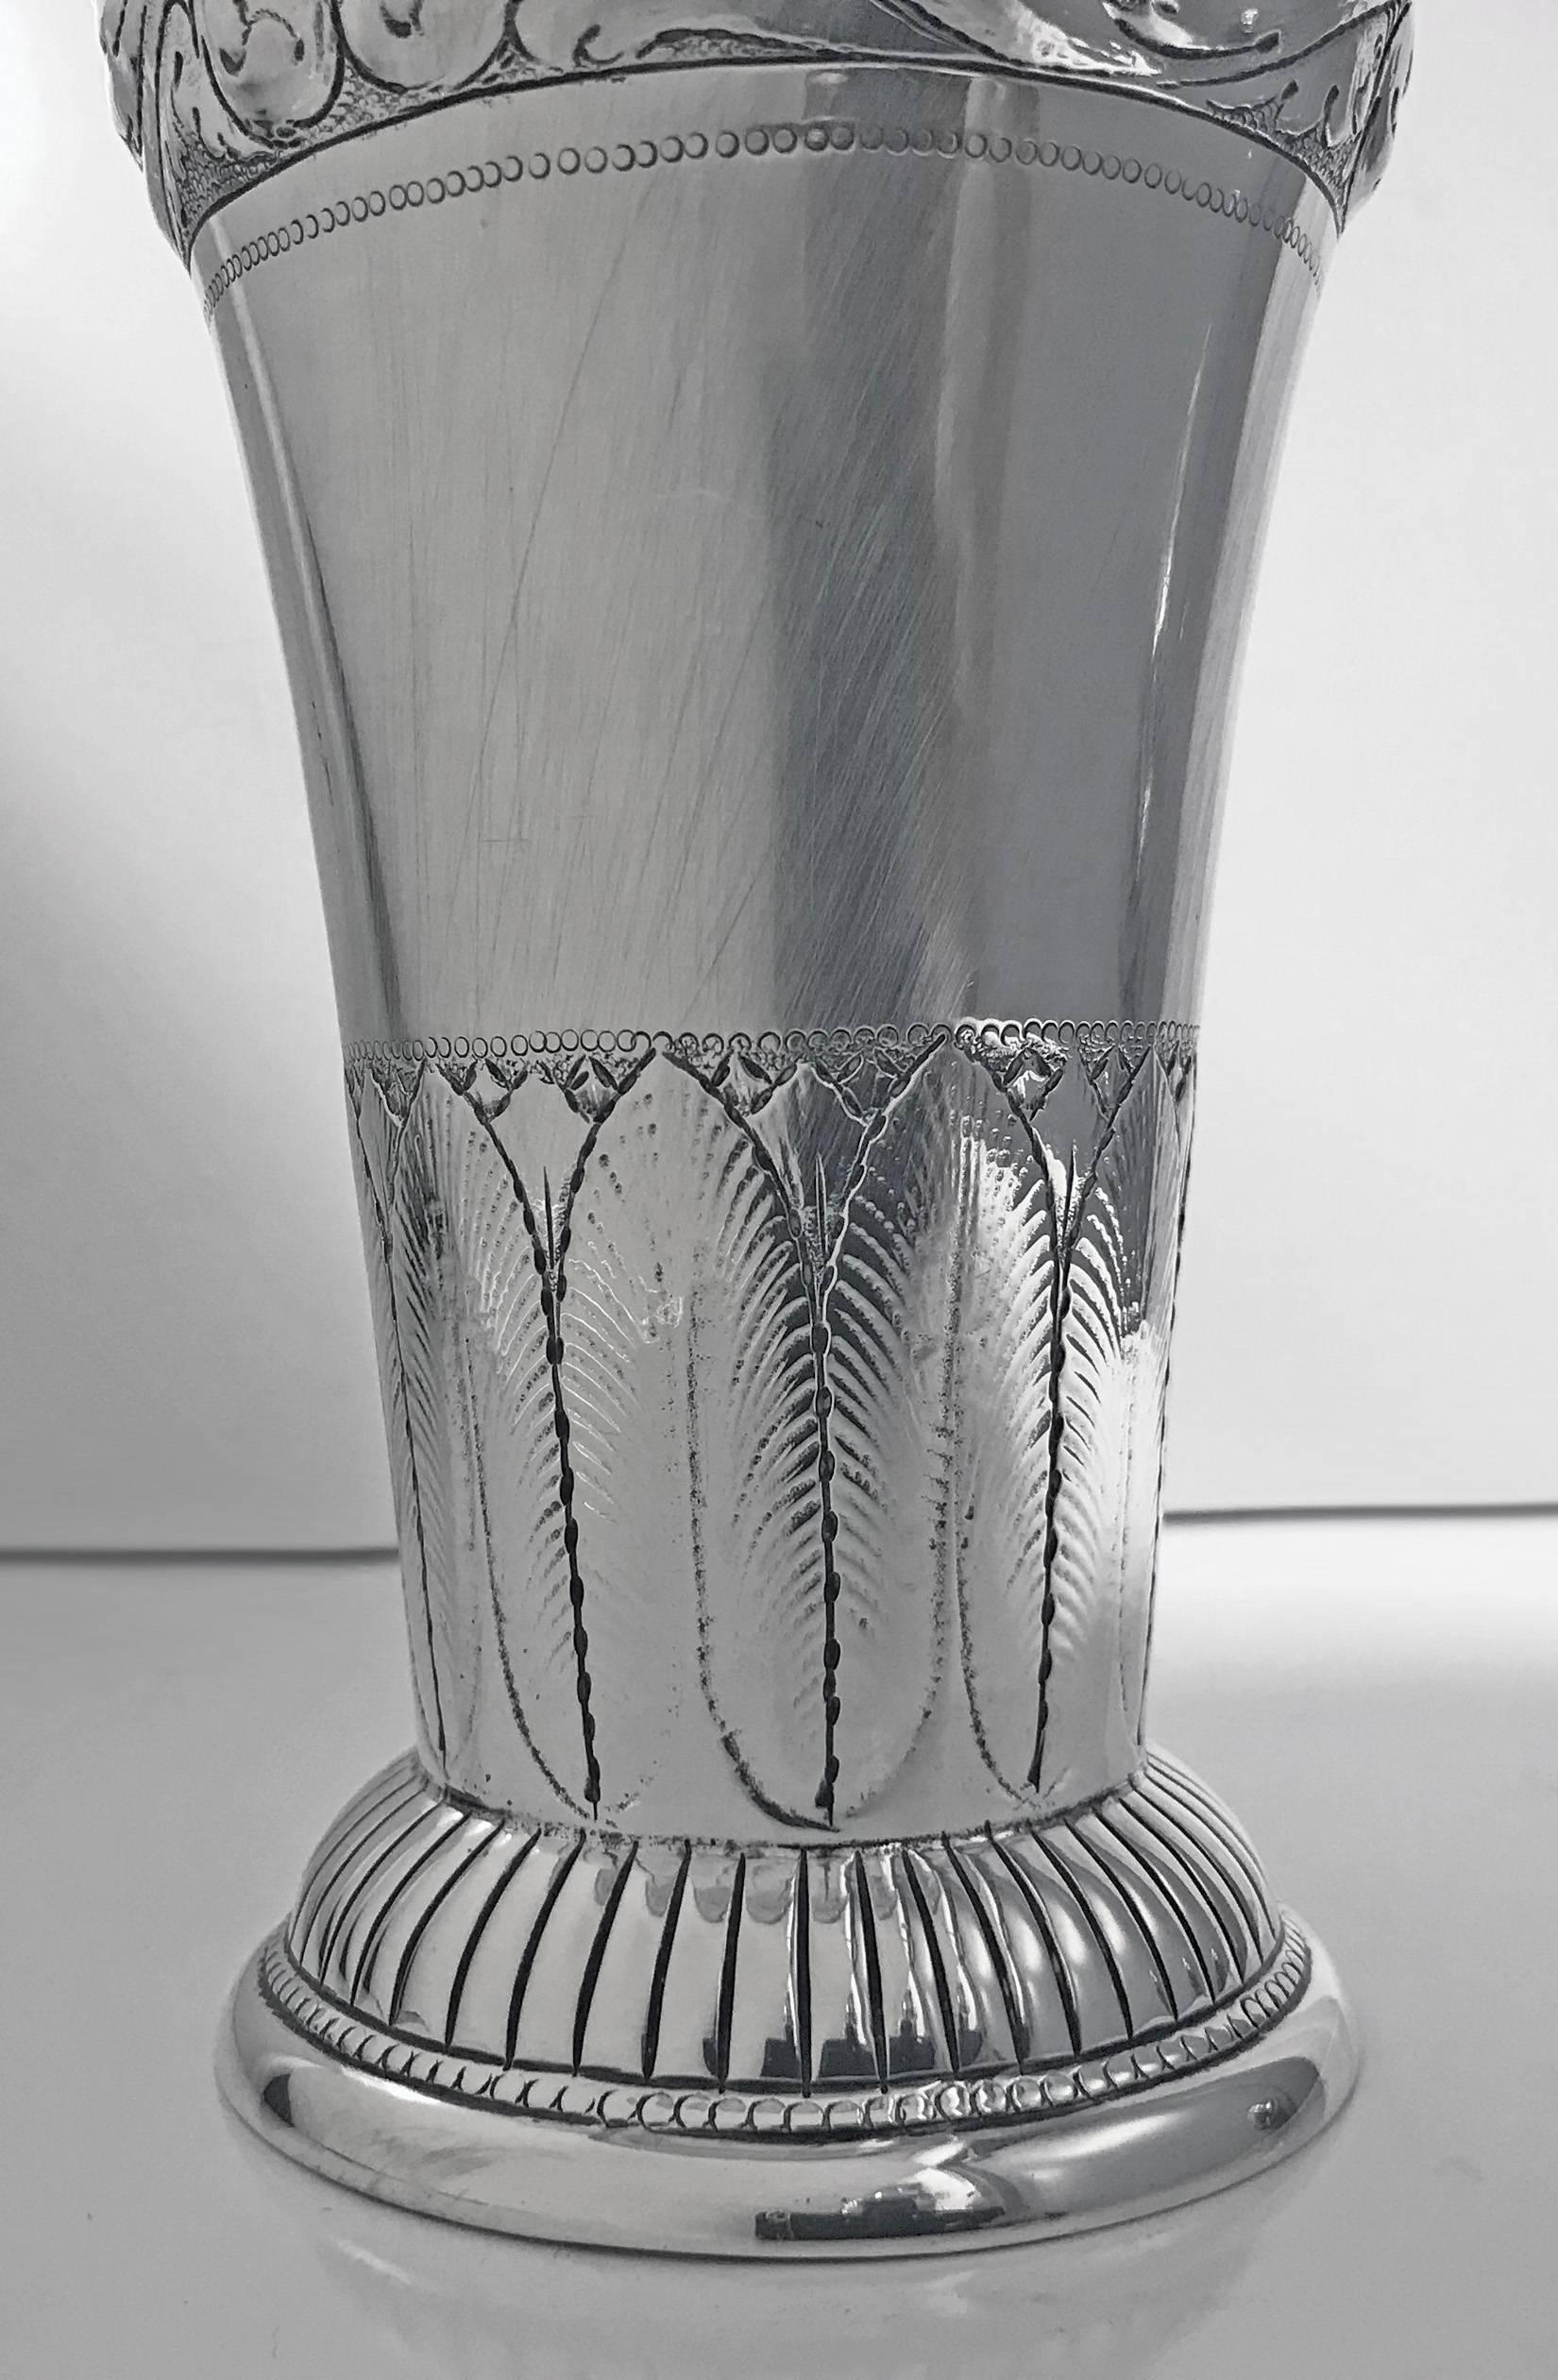 A. Steffensen, silver vase, Copenhagen Denmark, circa 1920. J.M.A. Steffensen (1905-1937) - Danish silversmith in Copenhagen hallmarked on base with the ‘Three Tower Mark’, assay mark ‘CFH’ by Christian Heise (active 1904-1932) and maker's mark ‘A.